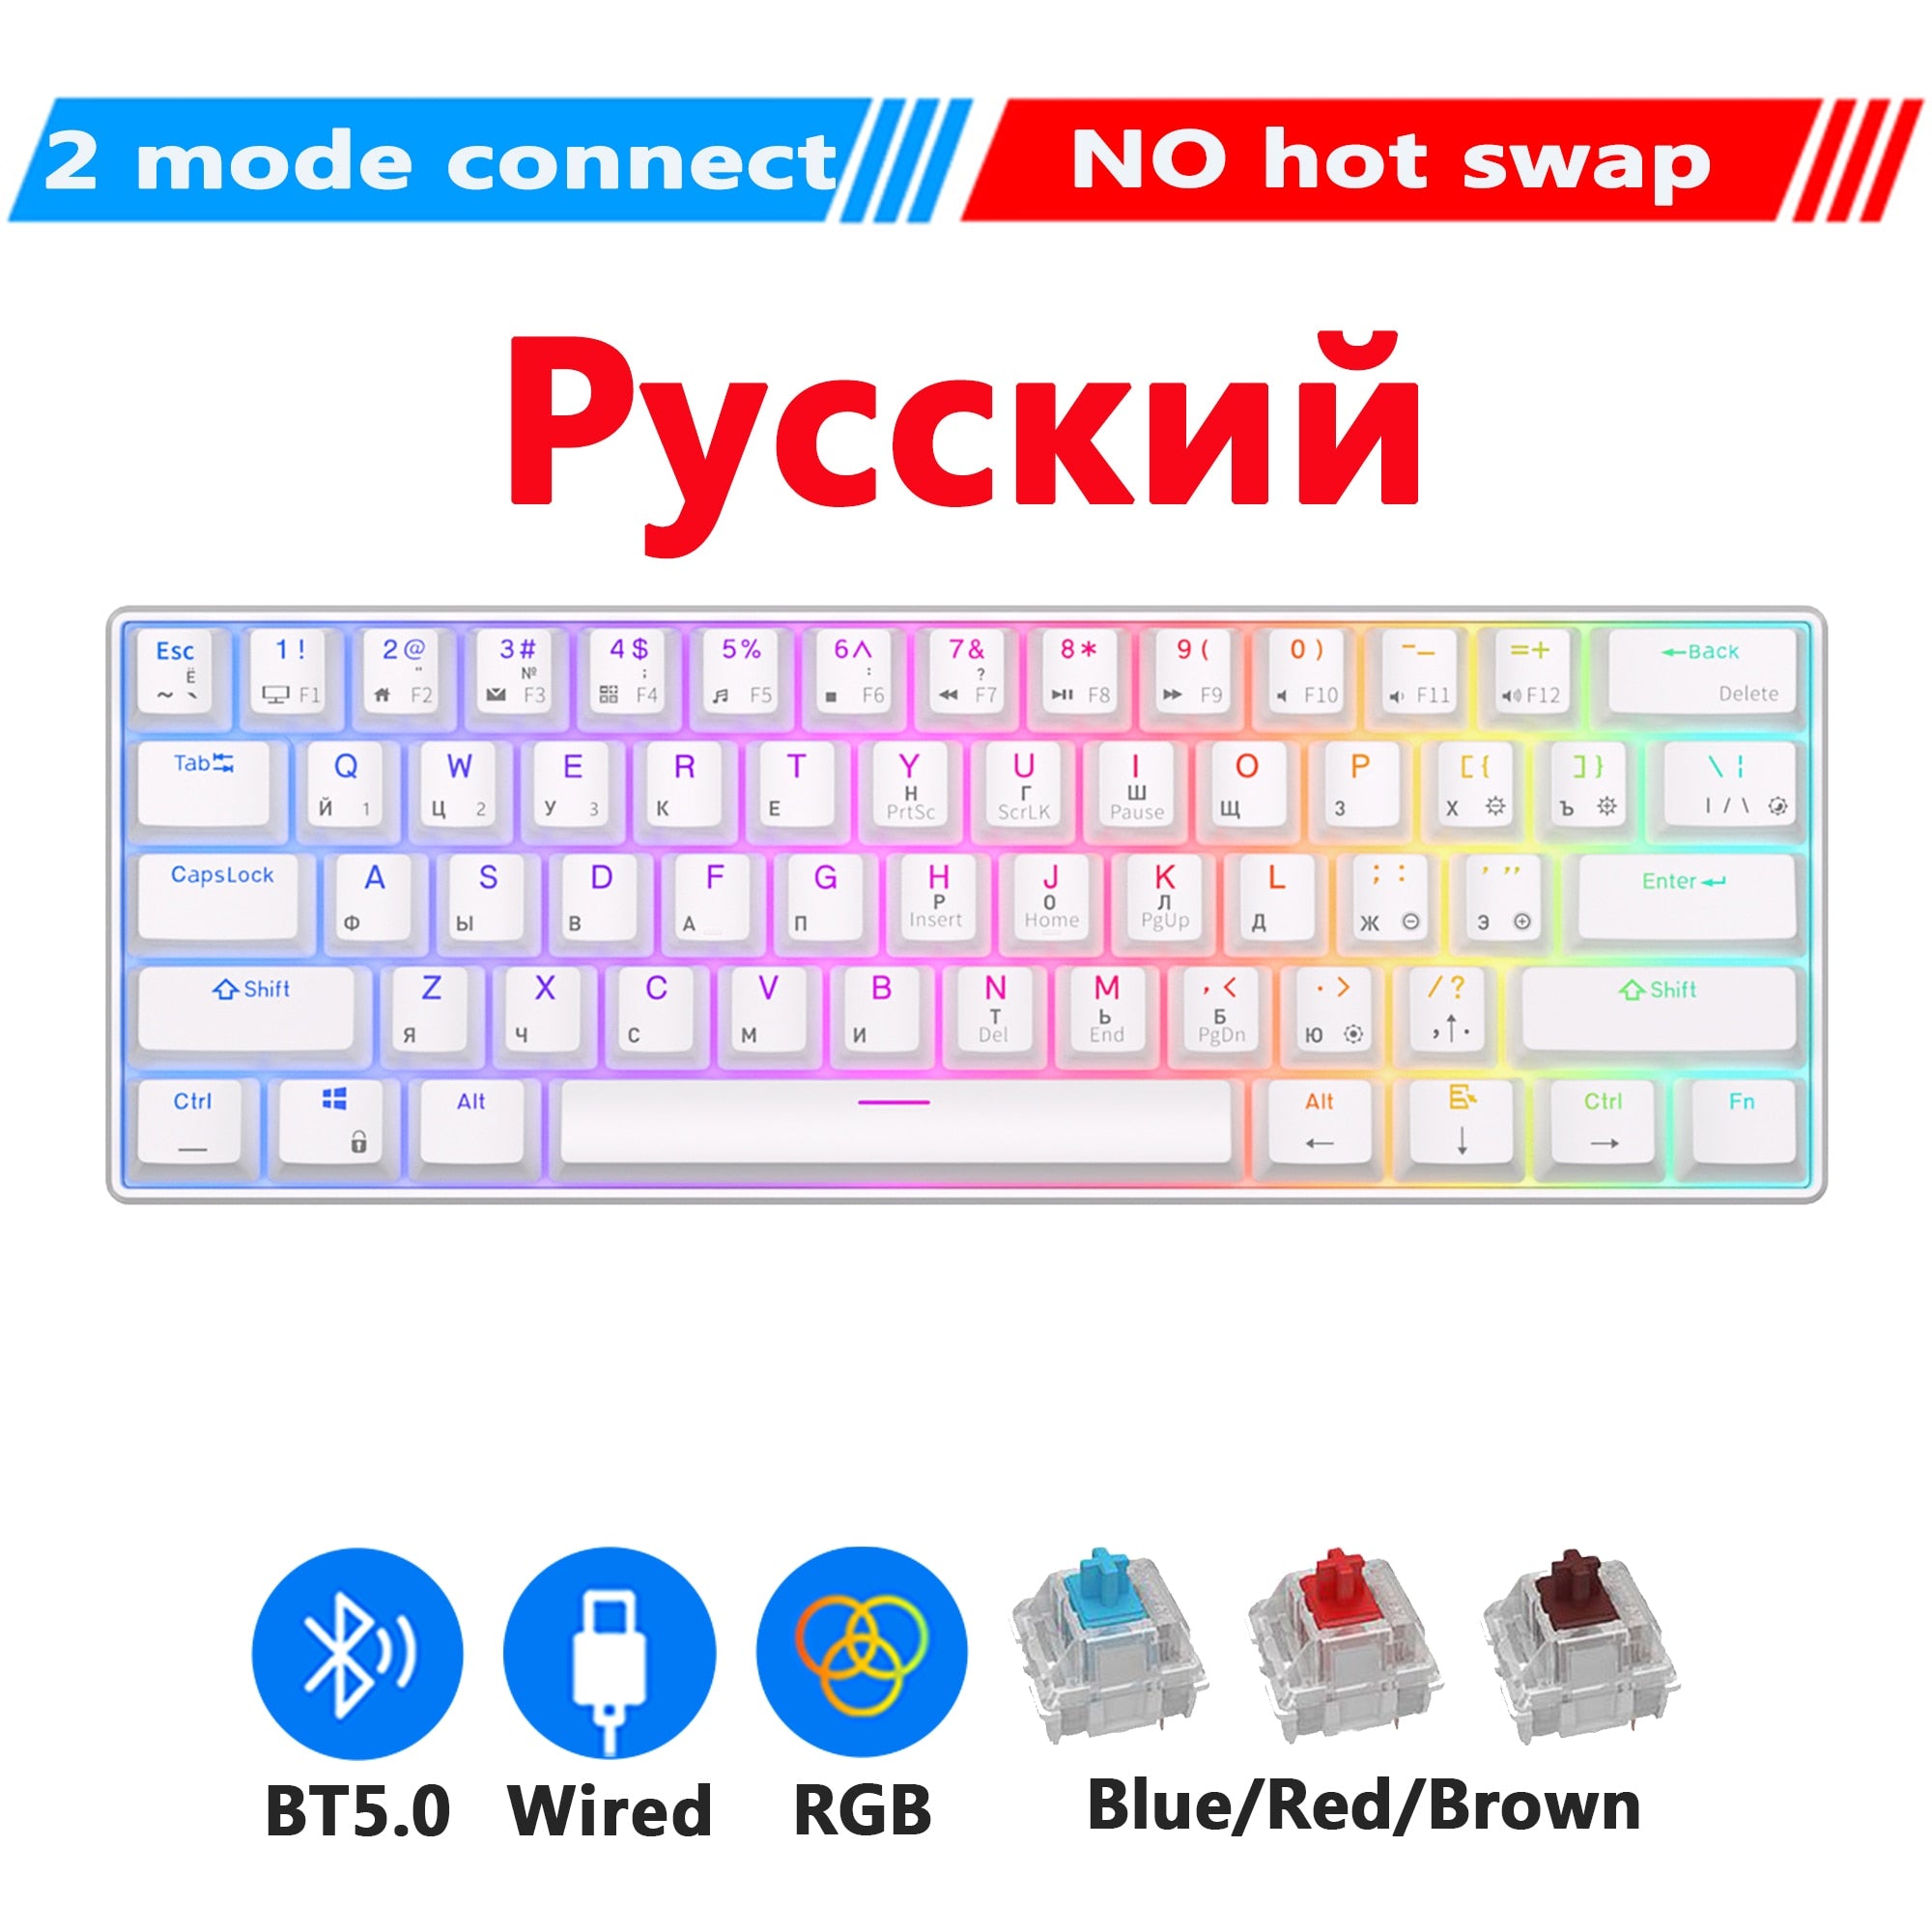 RK61 Royal Kludge Wireless Mechanical Keyboard Tri-Mode Bluetooth 5.0/2.4G/USB-C RGB Backlit 61 Key Hot-Swappable Gamer Keyboard